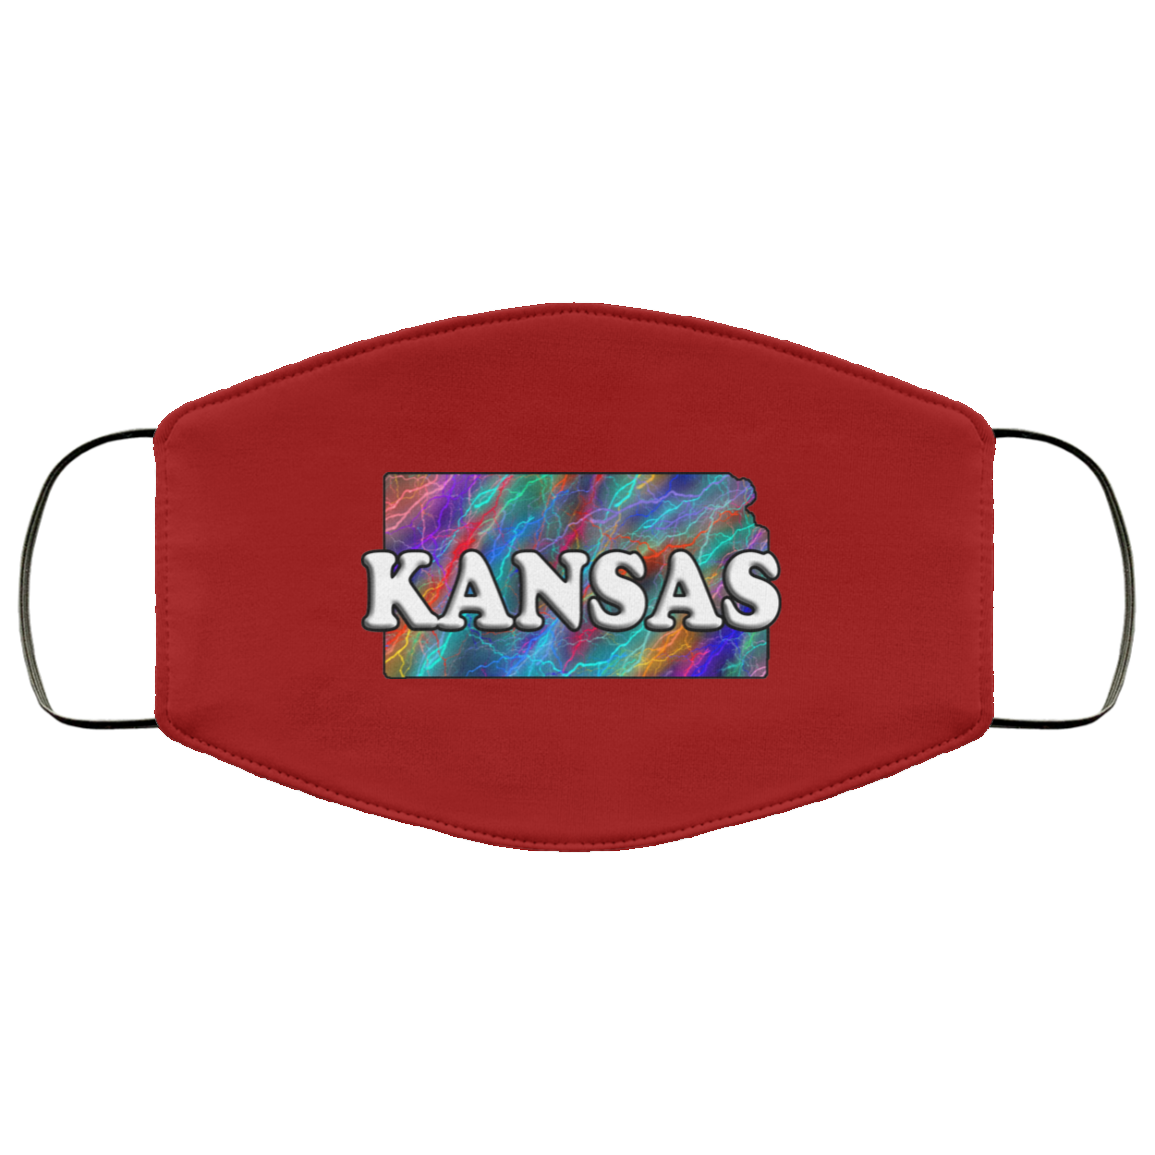 Kansas 2 Layer Protective Face Mask